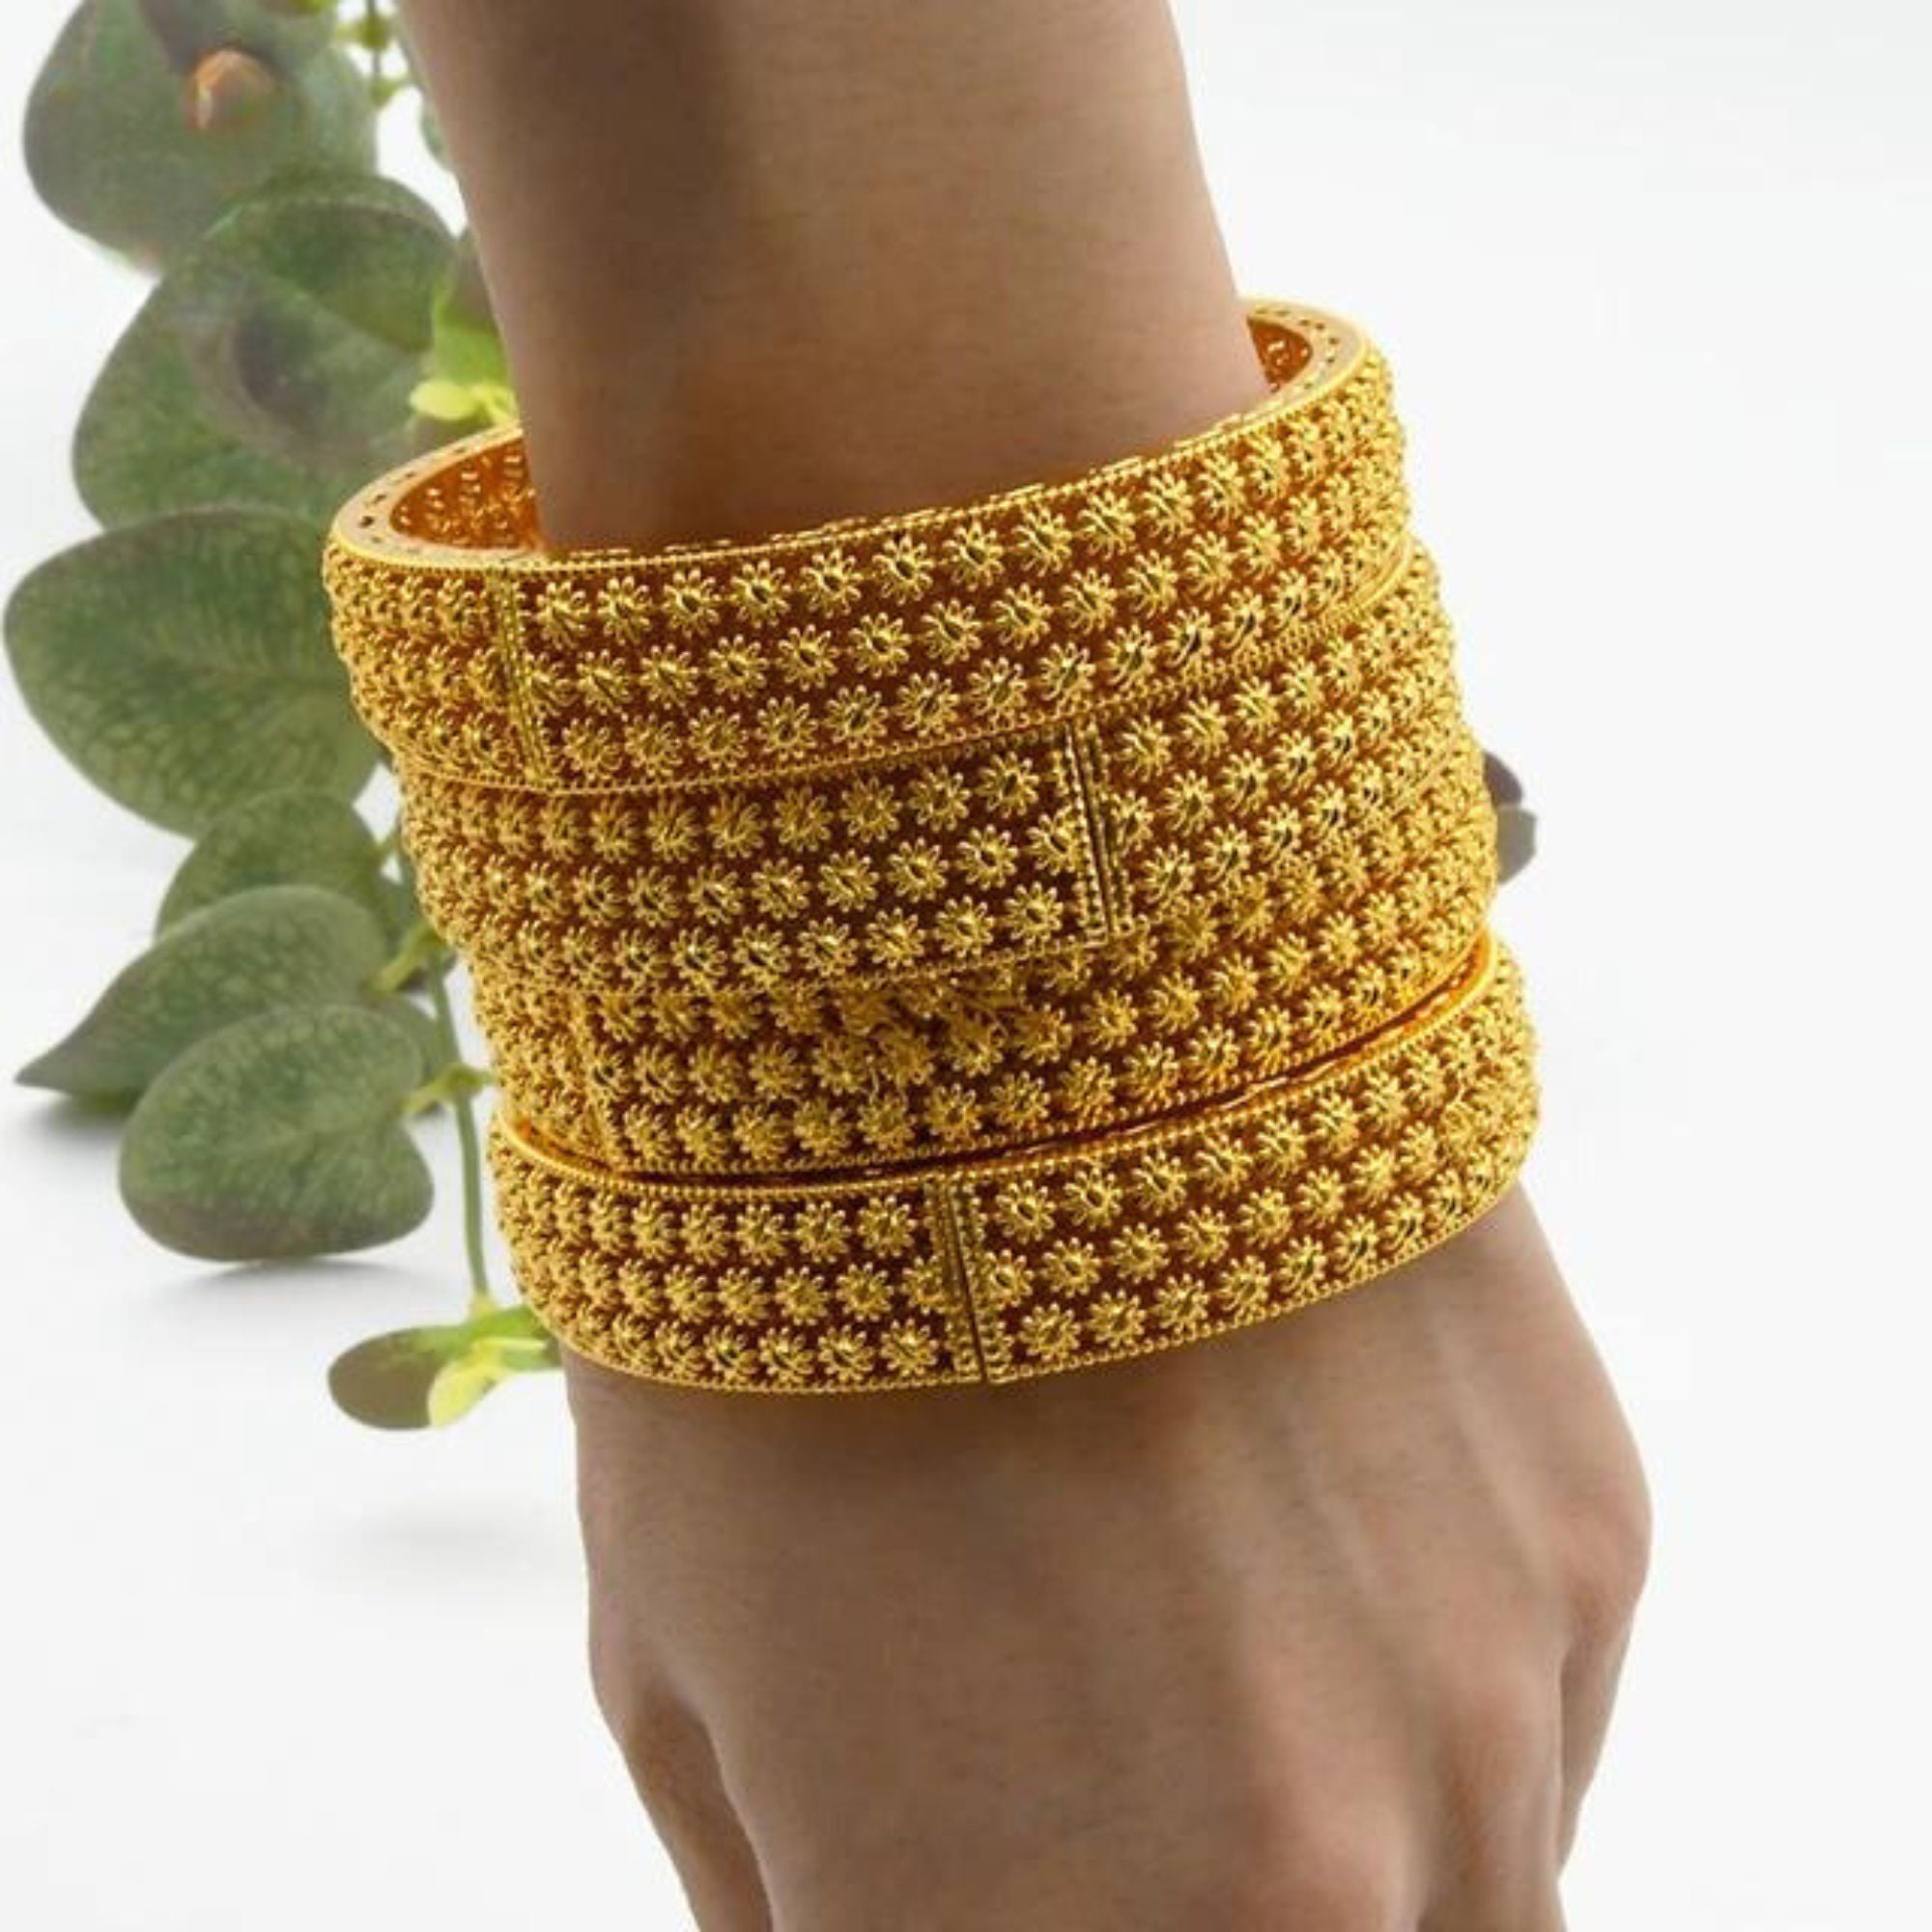 22k gold bracelet designs ladies dubai 22k gold bracelet designs ladies  dubai Suppliers and Manufacturers at Alibabacom